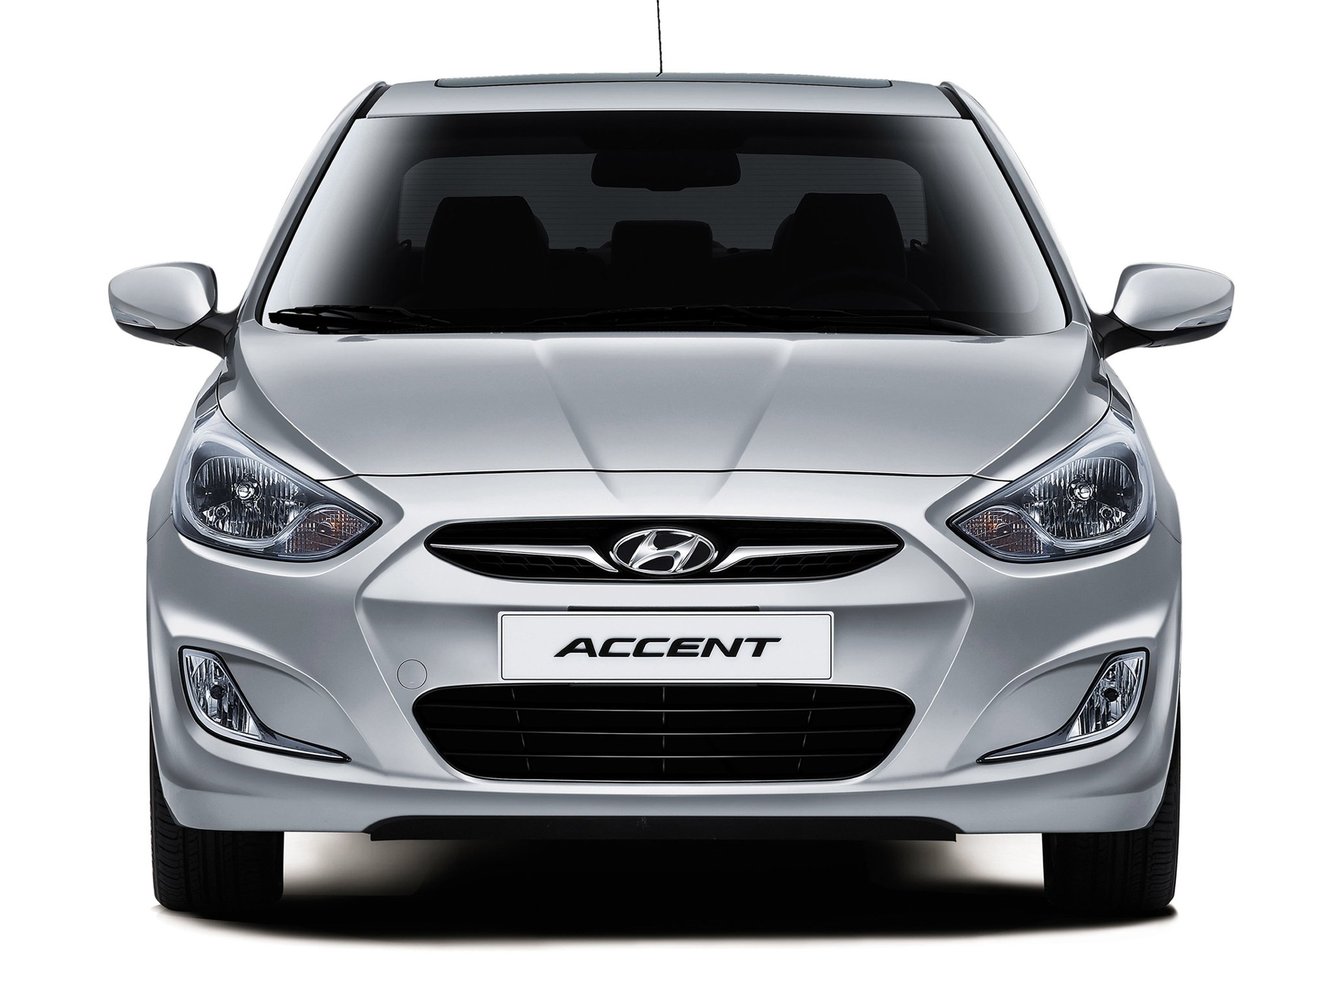 седан Hyundai Accent 2010 - 2016г выпуска модификация 1.4 AT (107 л.с.)